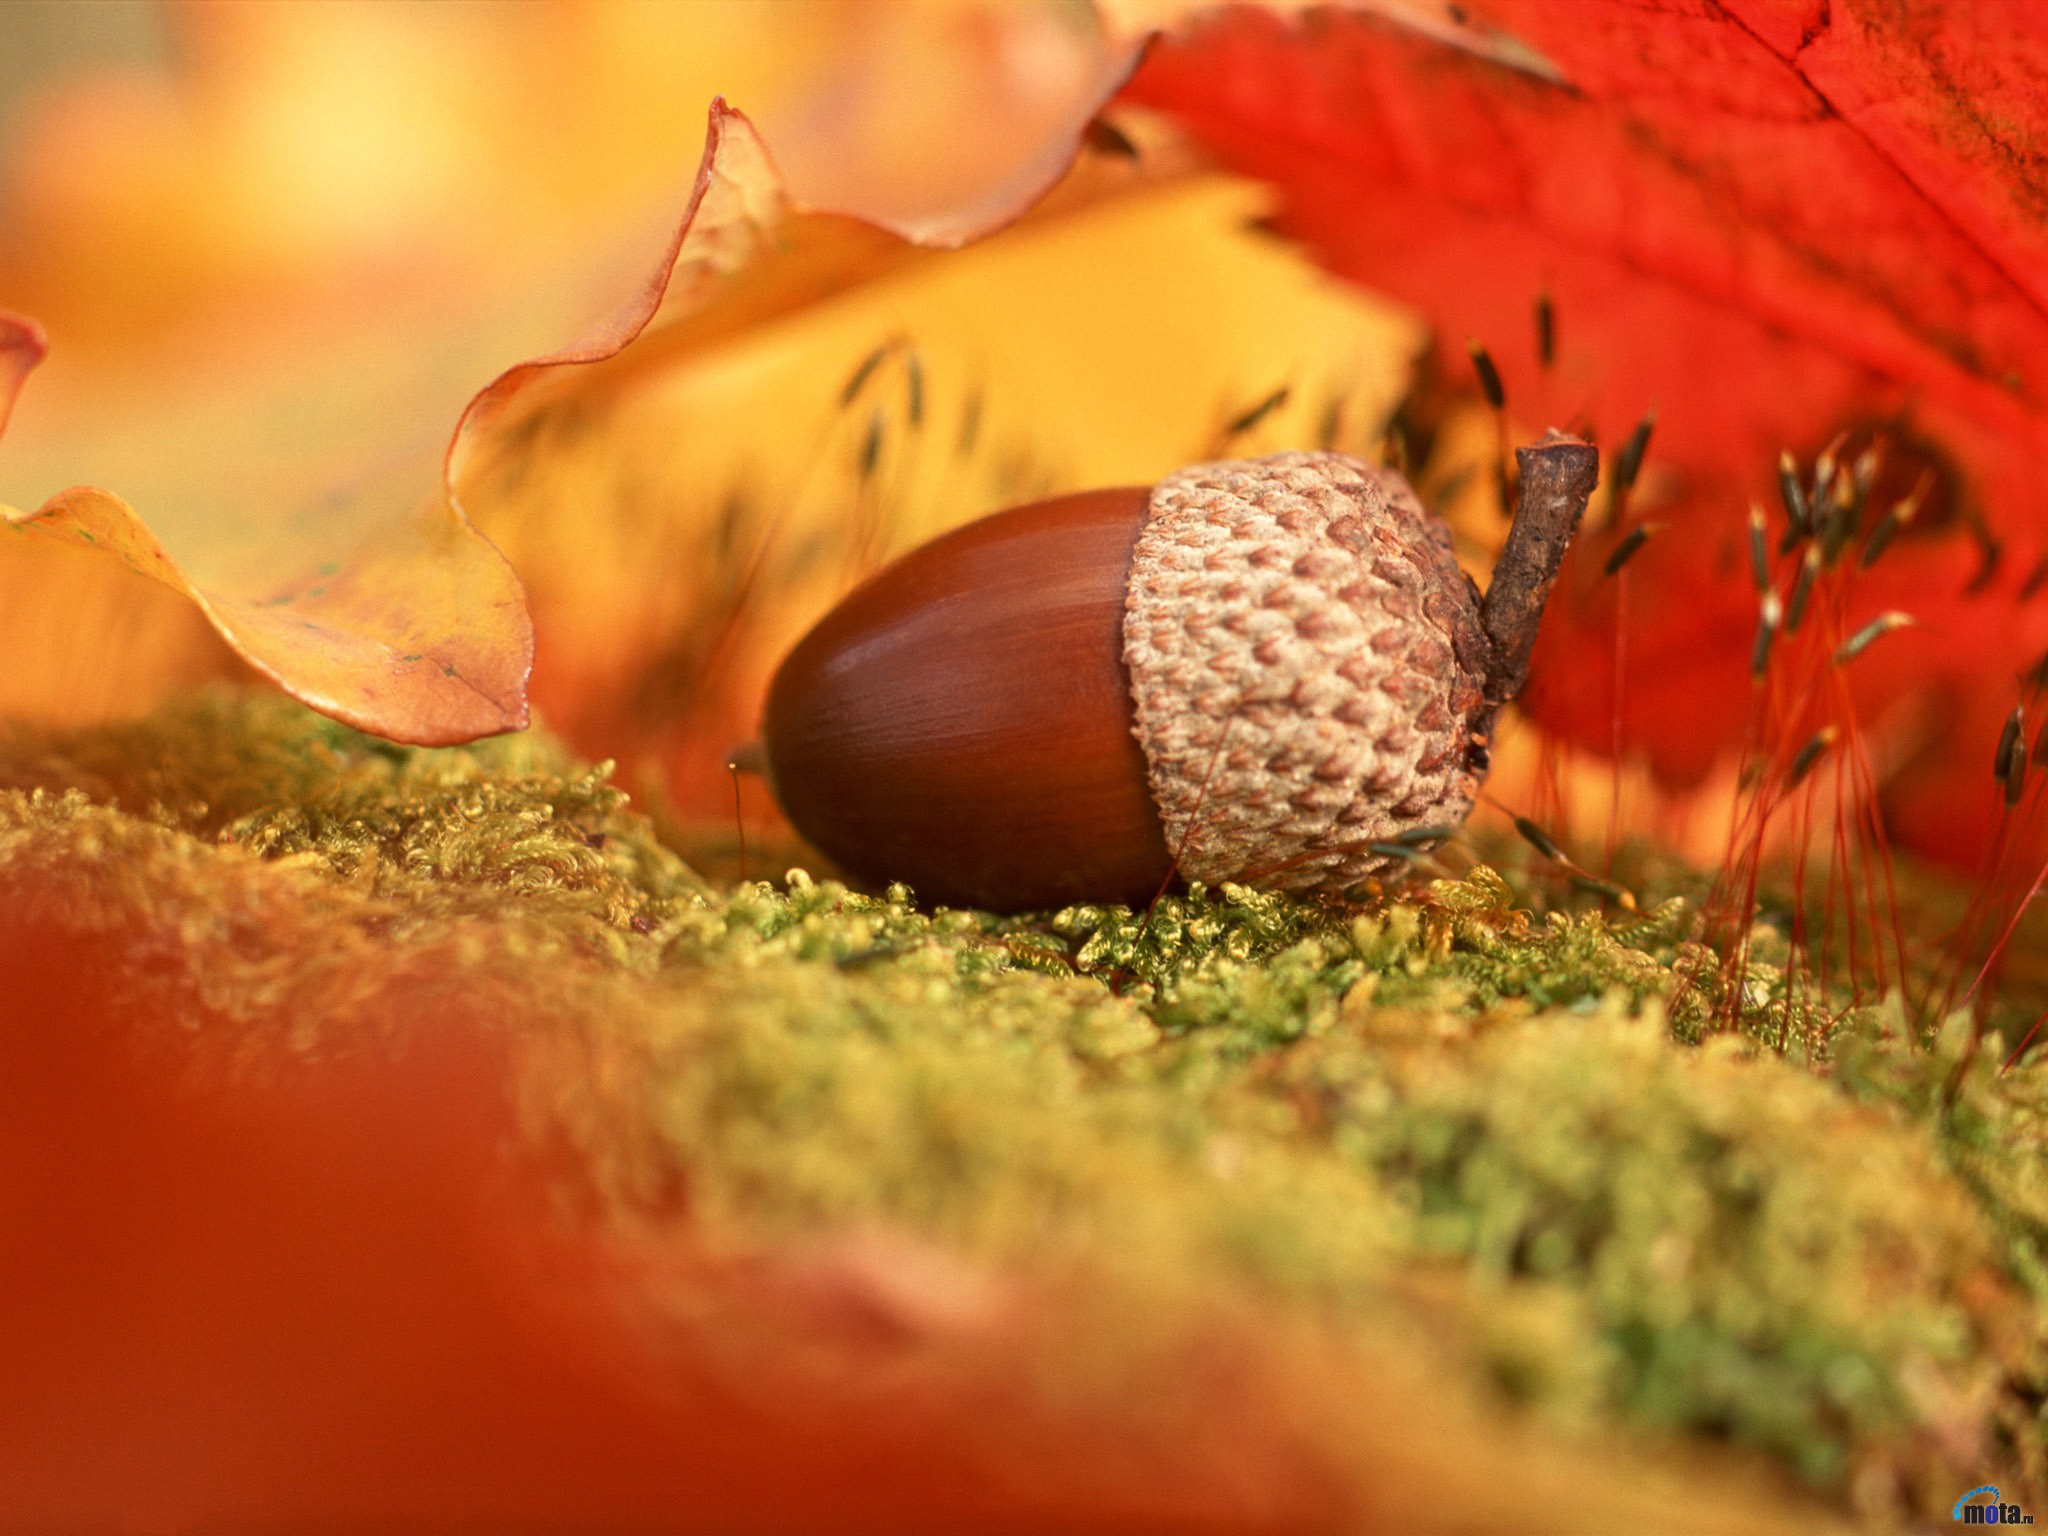 acorn wallpaper,acorn,macro photography,nut,leaf,close up